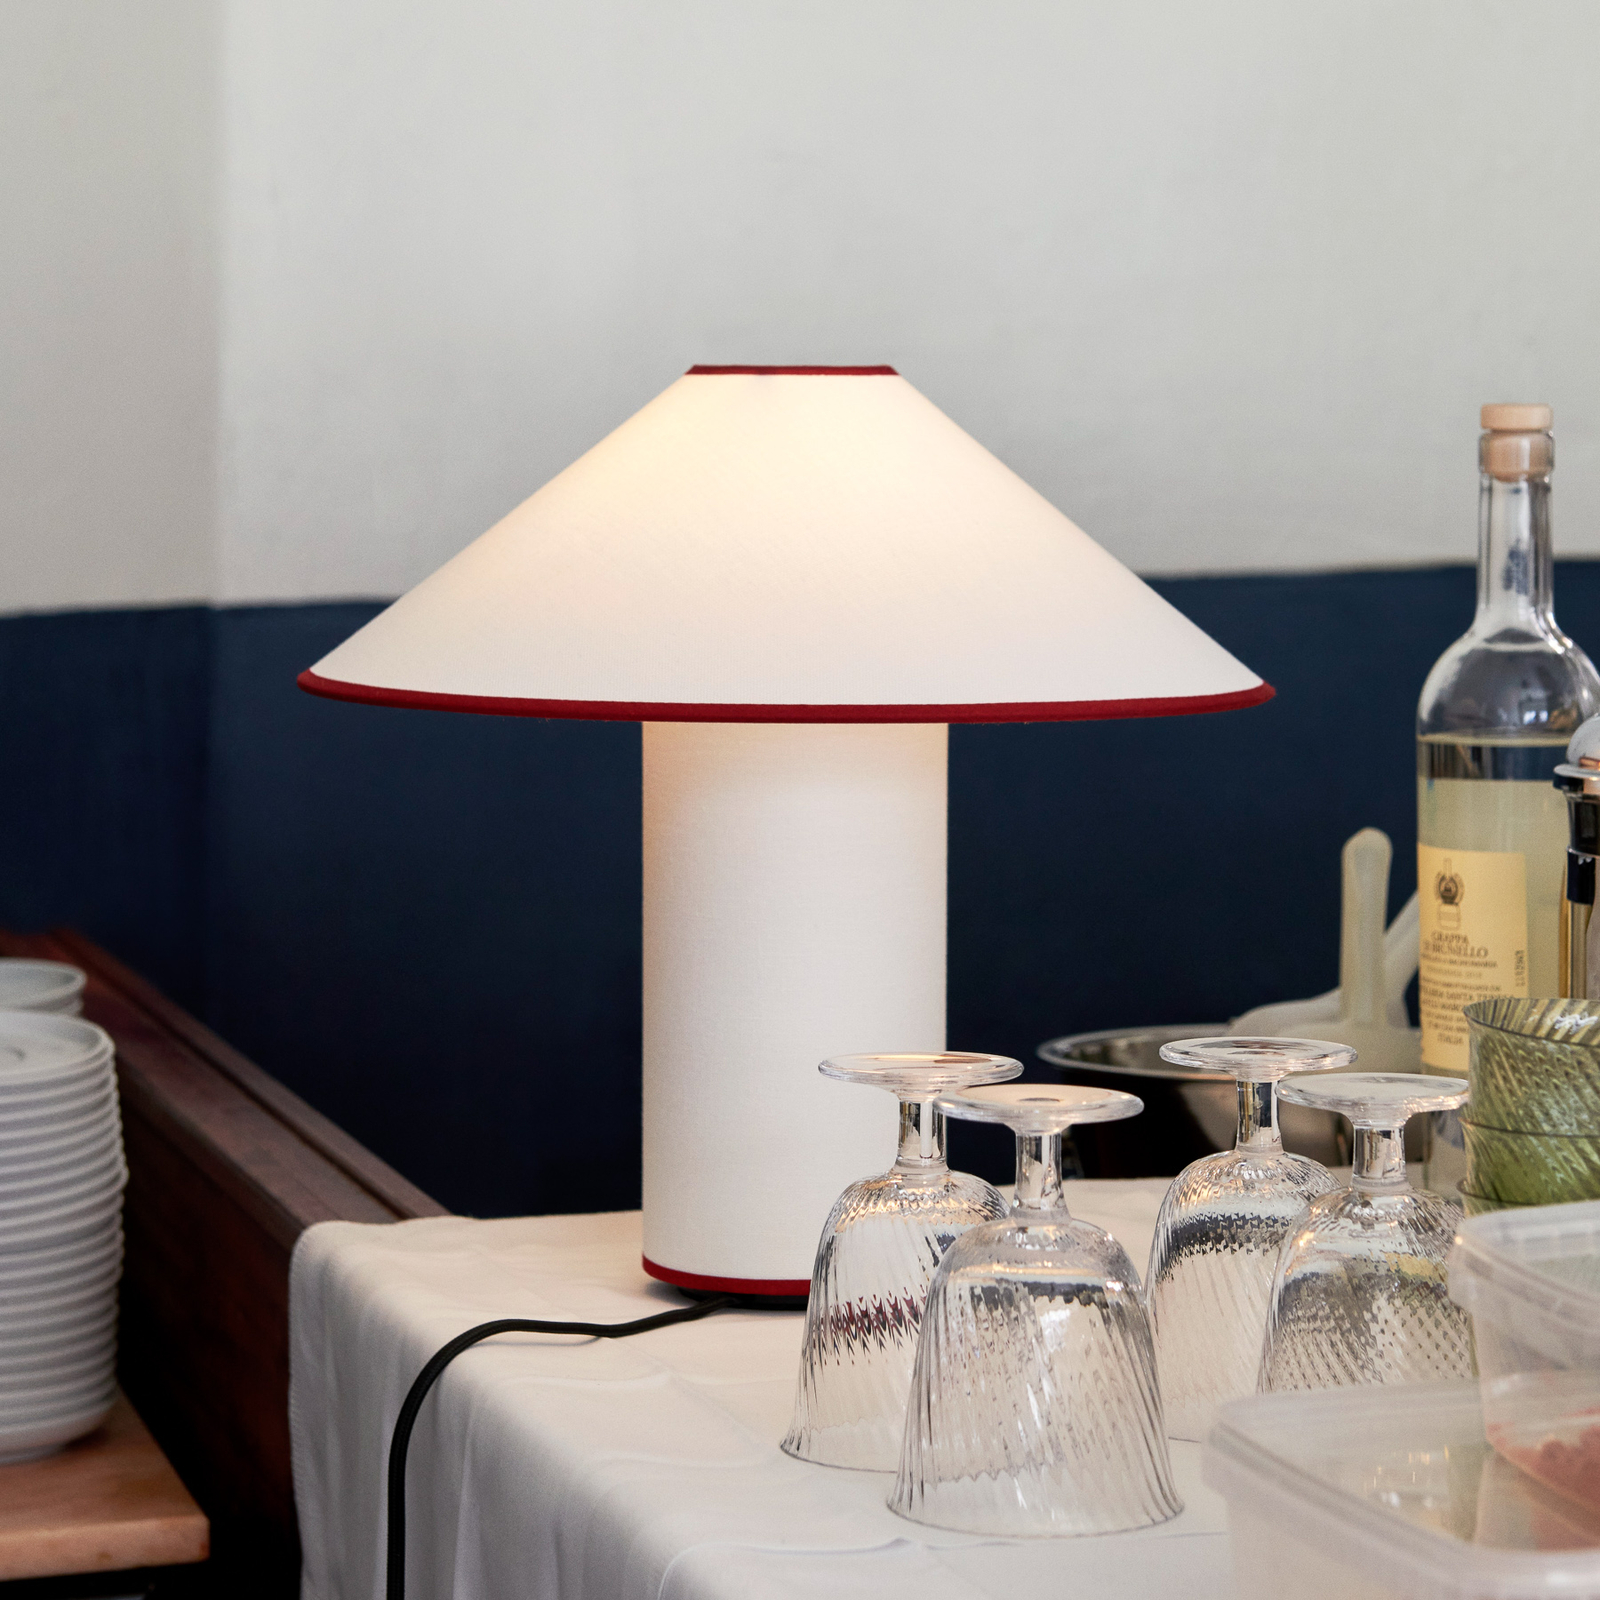 &Tradition Colette ATD6 table lamp, white/merlot